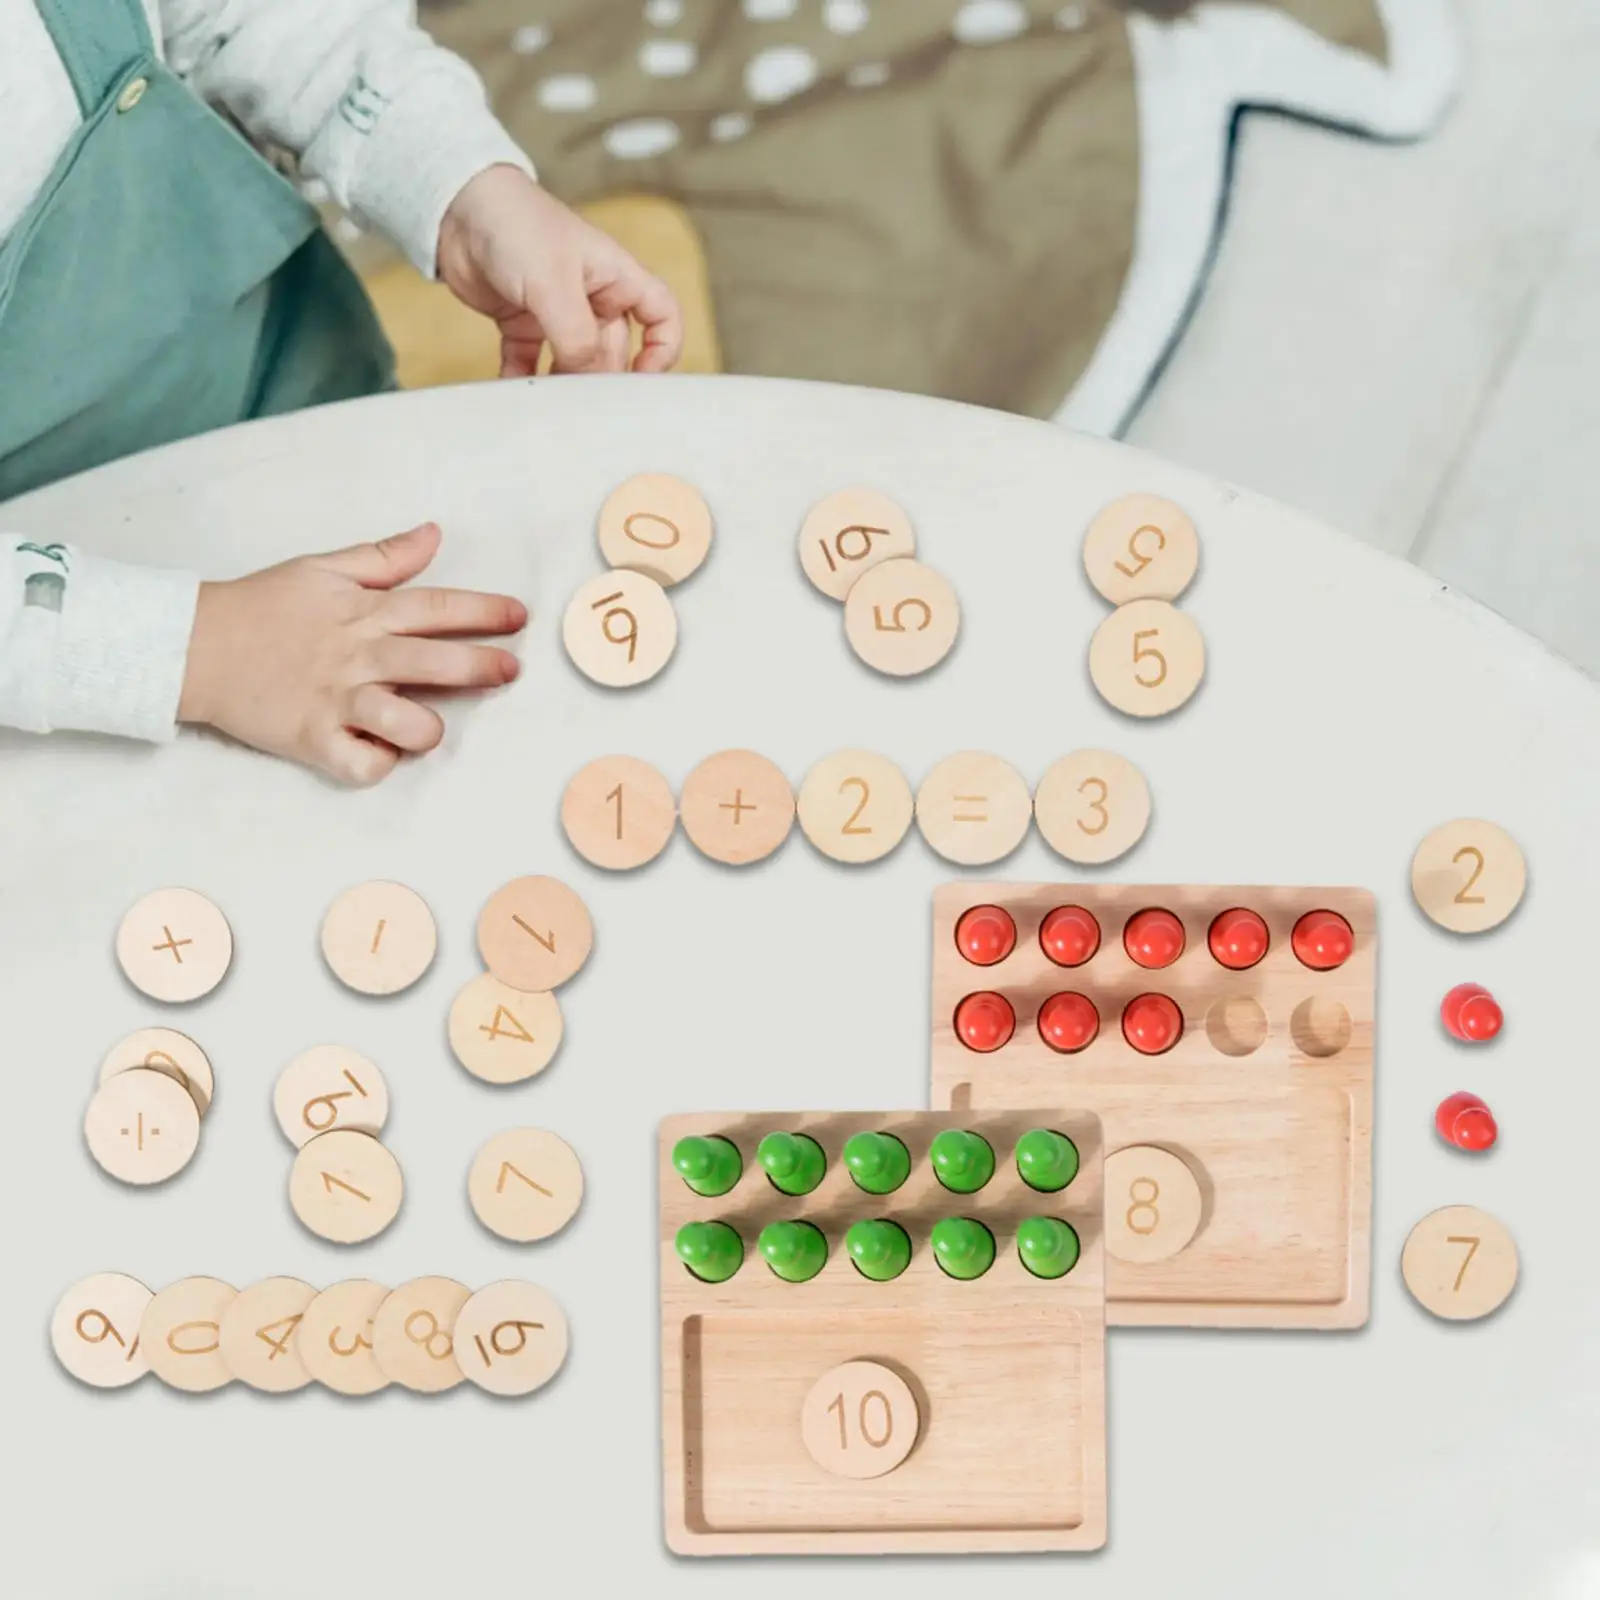 Wooden Montessori Math Board Preschool Learning Game for Kids Girls Children